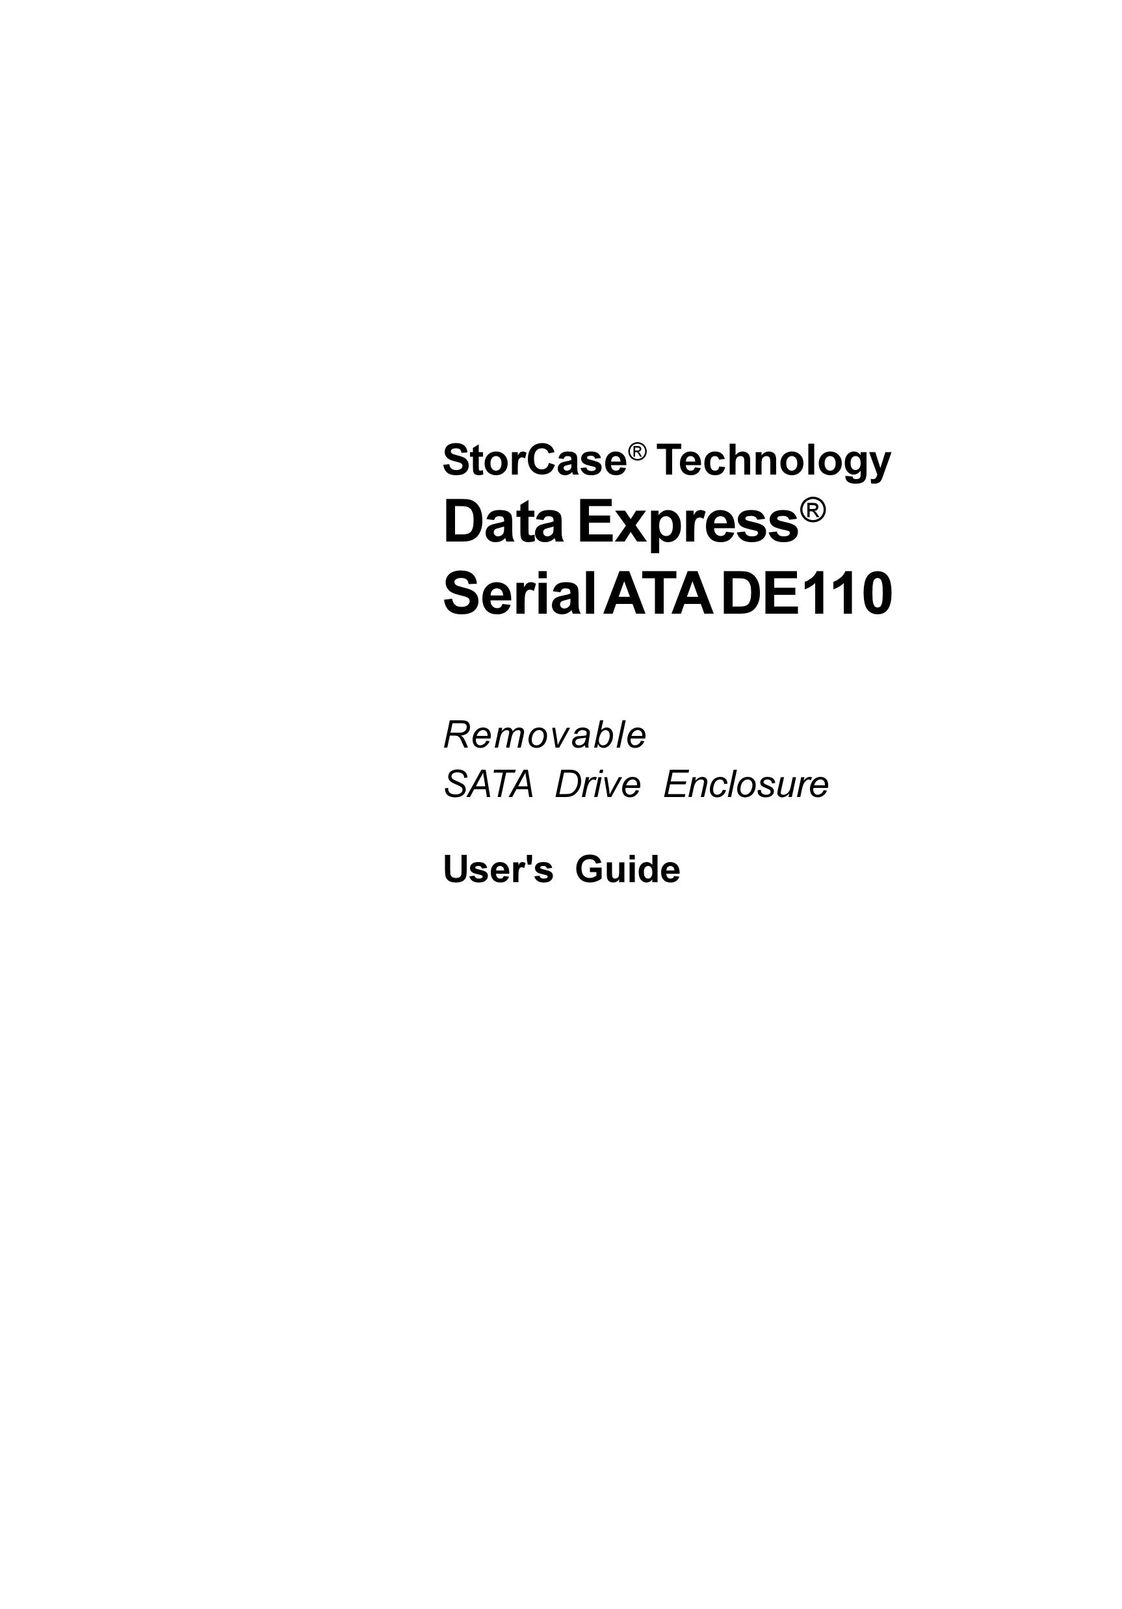 StorCase Technology DE110 Computer Drive User Manual